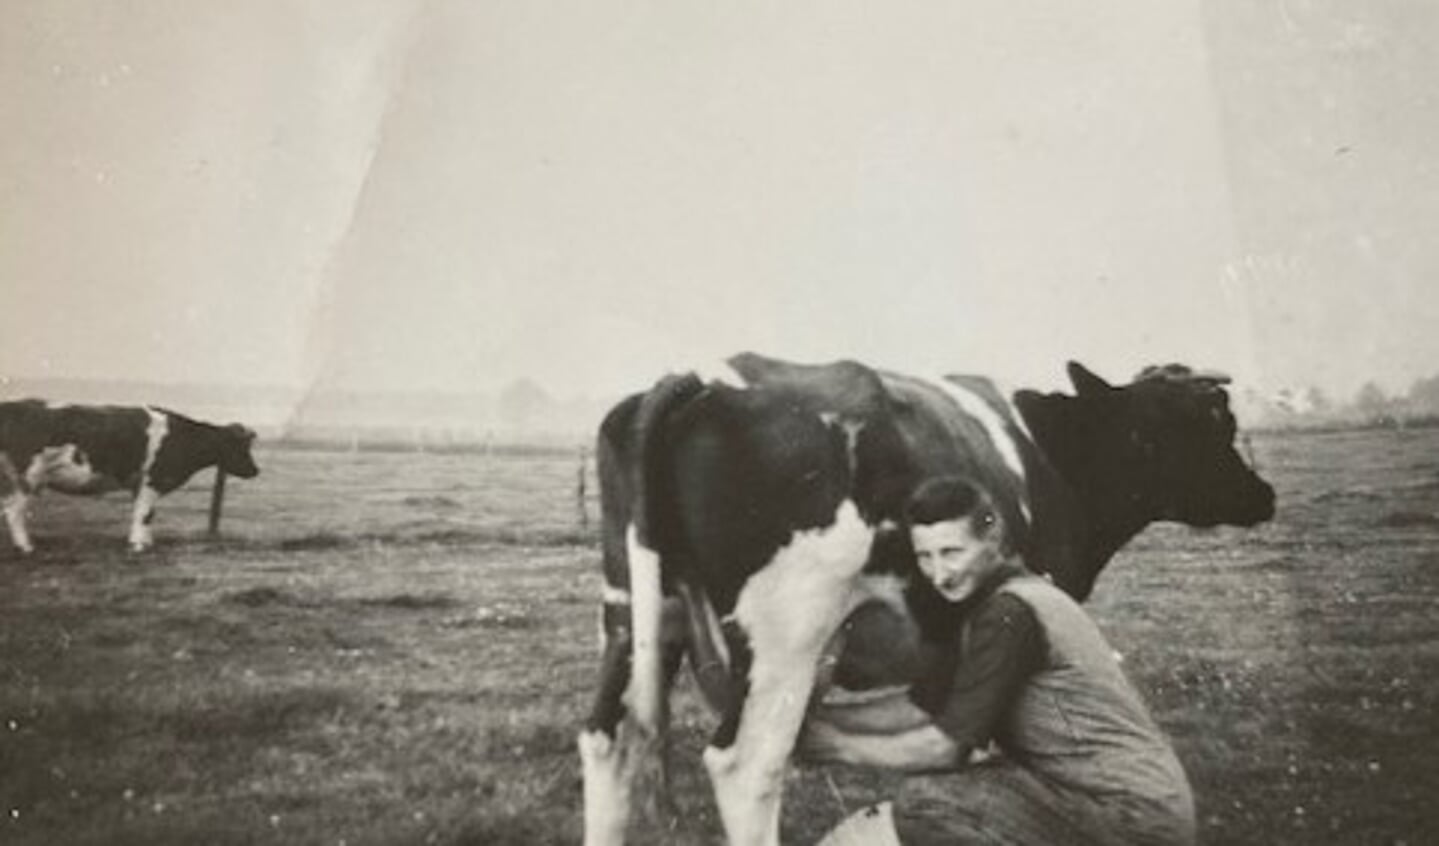  Opoe Izaks melkt de koeien. Foto: privé-archief Derk Willem Izaks 